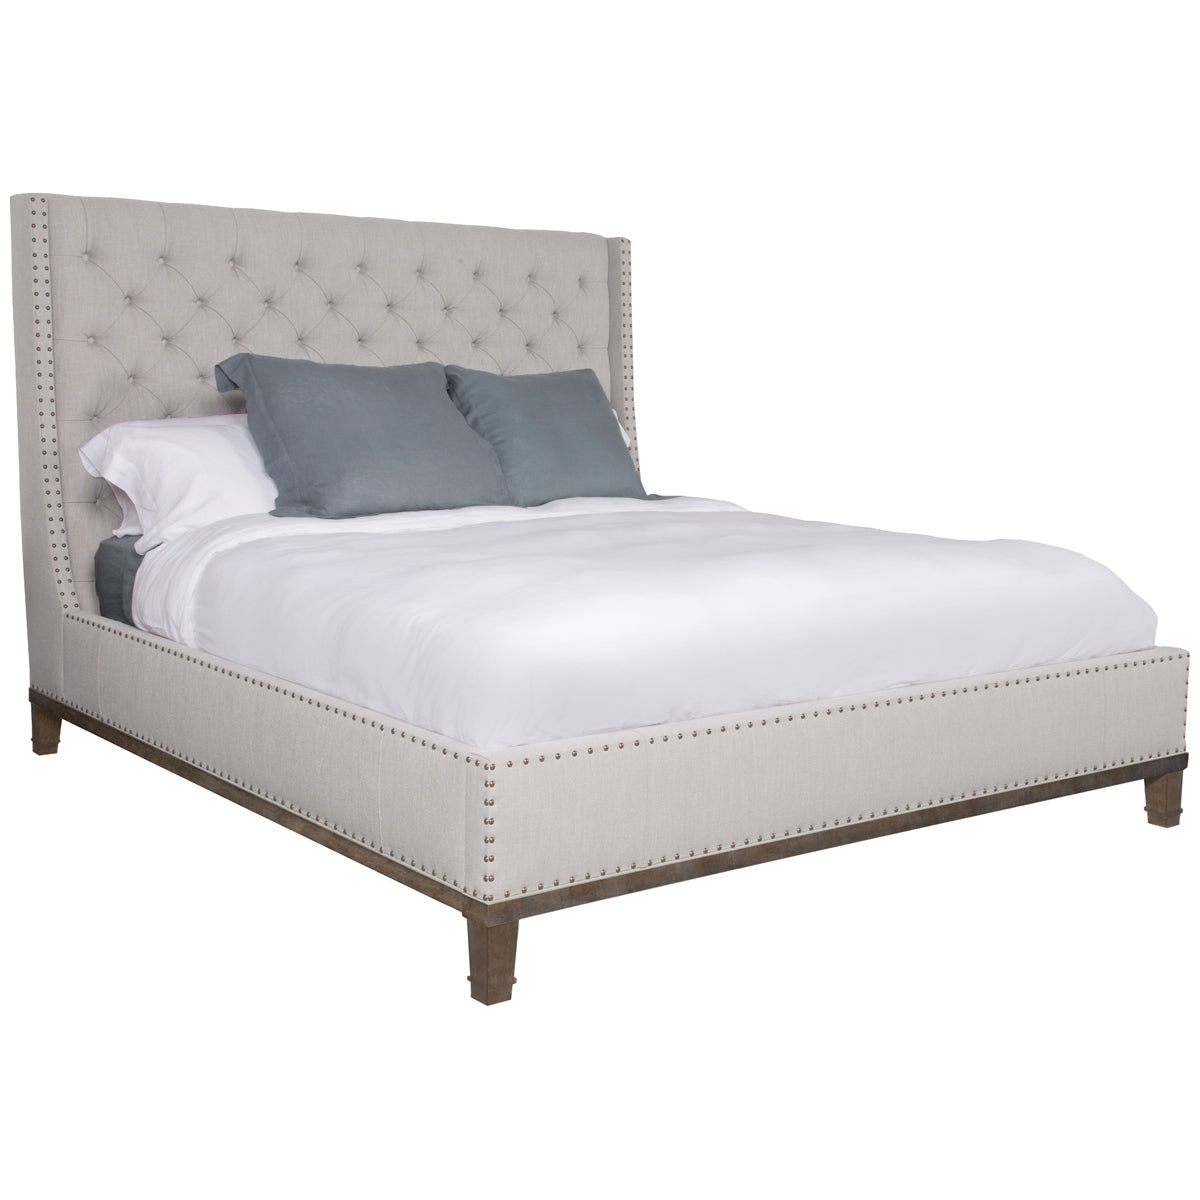 Vanguard Furniture Cleo King Bed